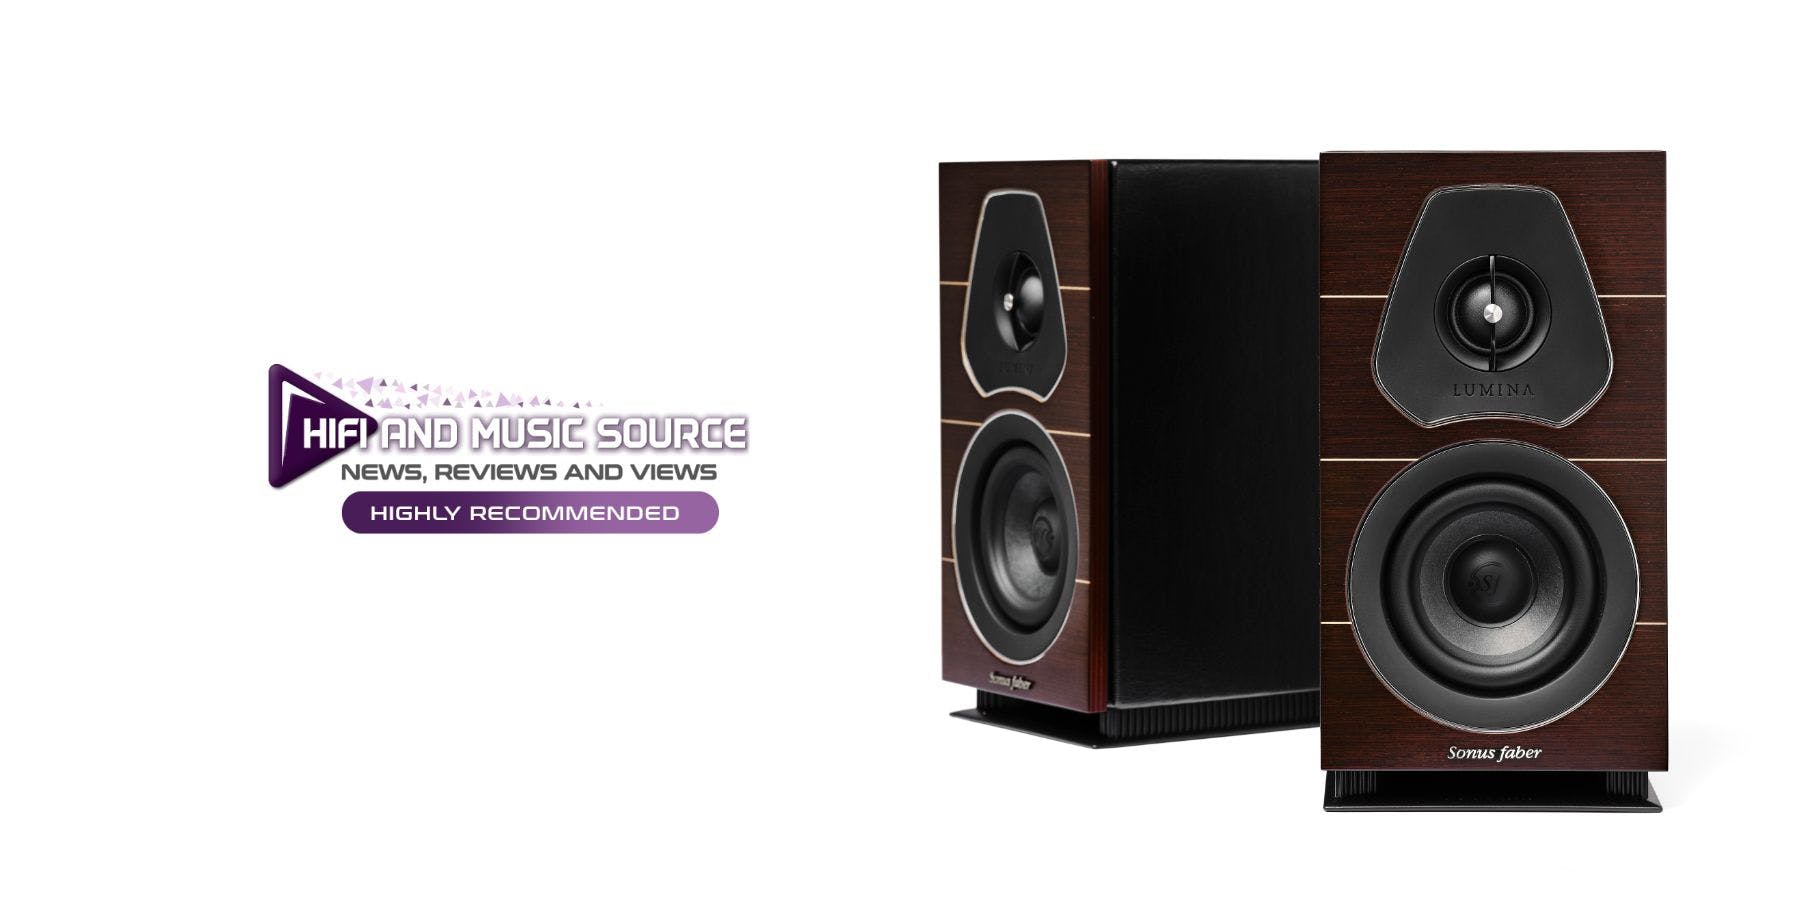 hifiandmusicsource.com reviews the Sonus faber Lumina I speakers